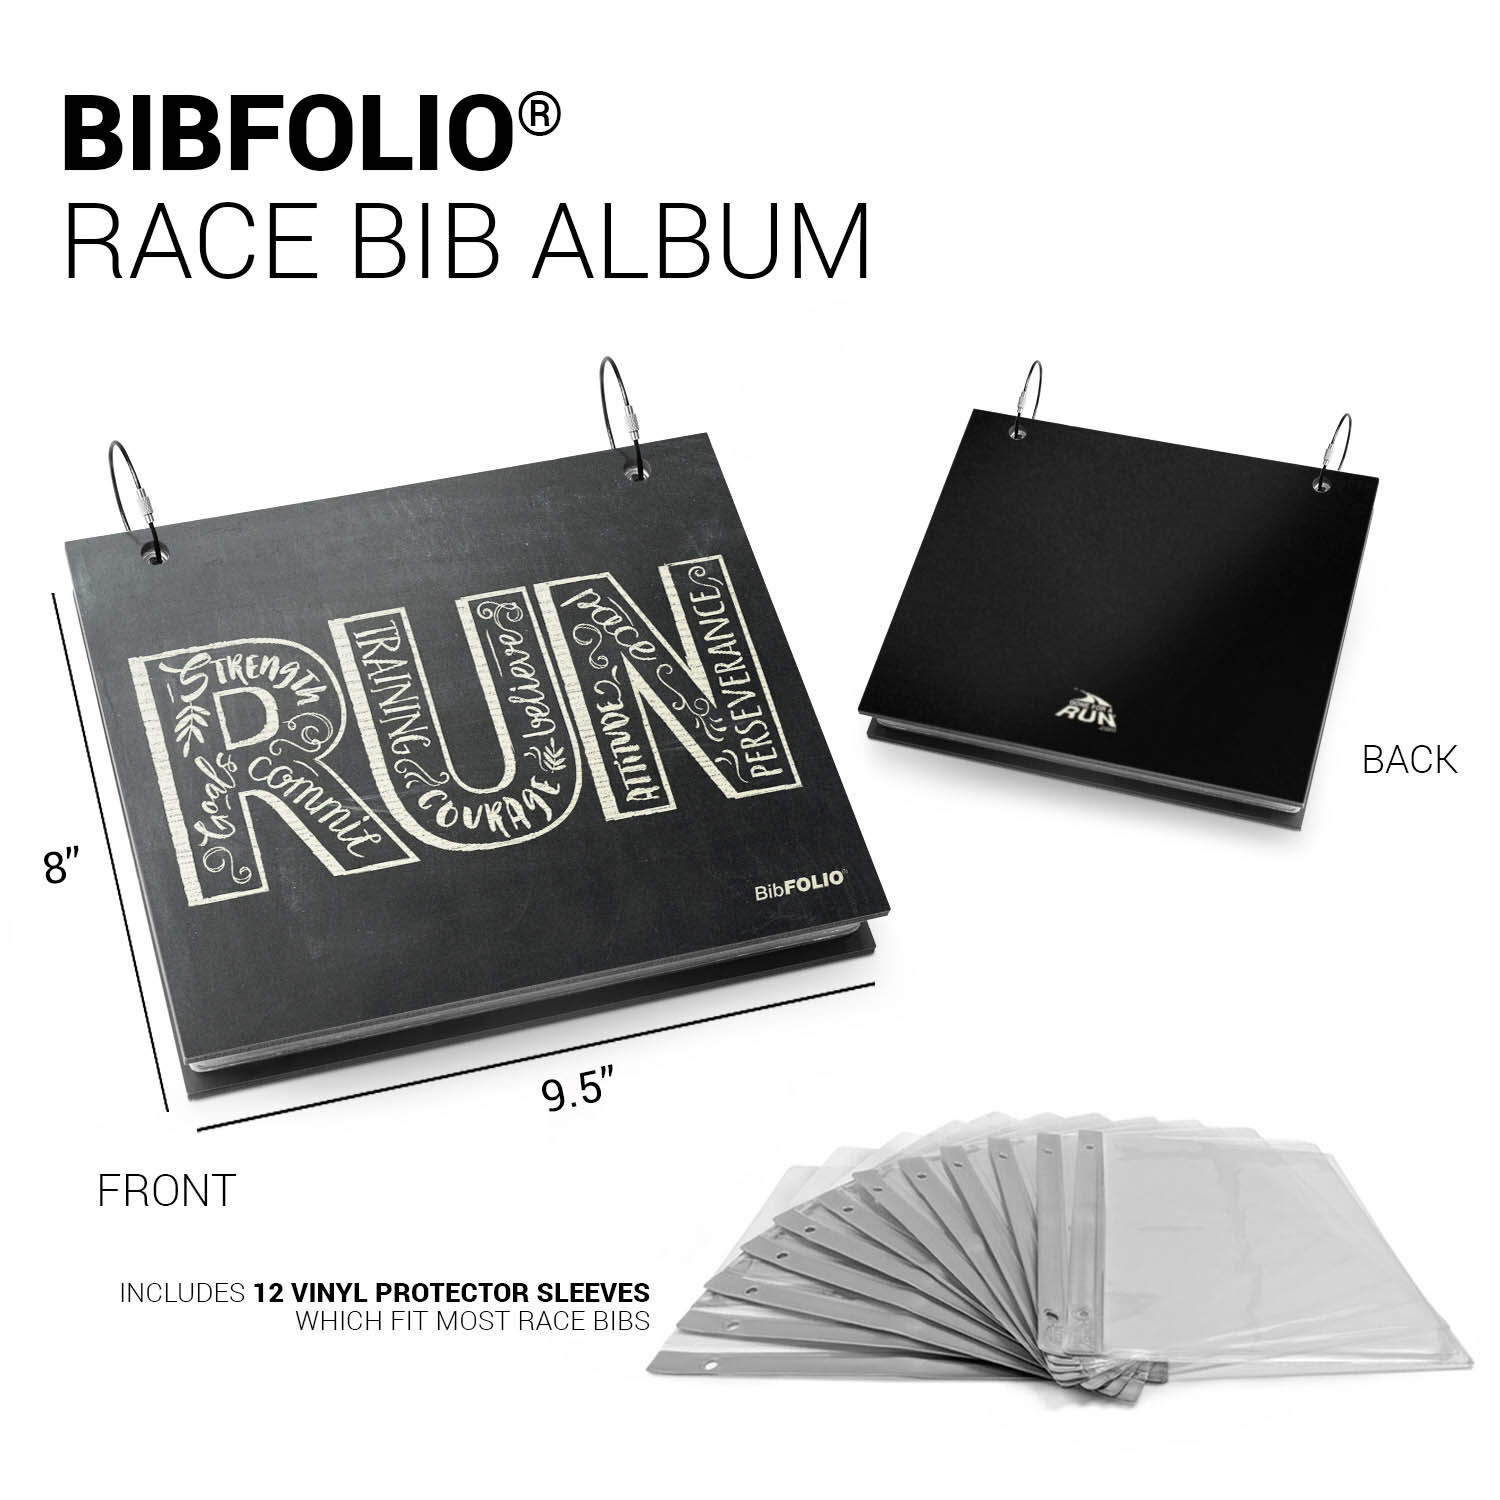 Gone For a Run BibFOLIO Race Bib Album Bib Holder Inspire to Run Chalkboard 